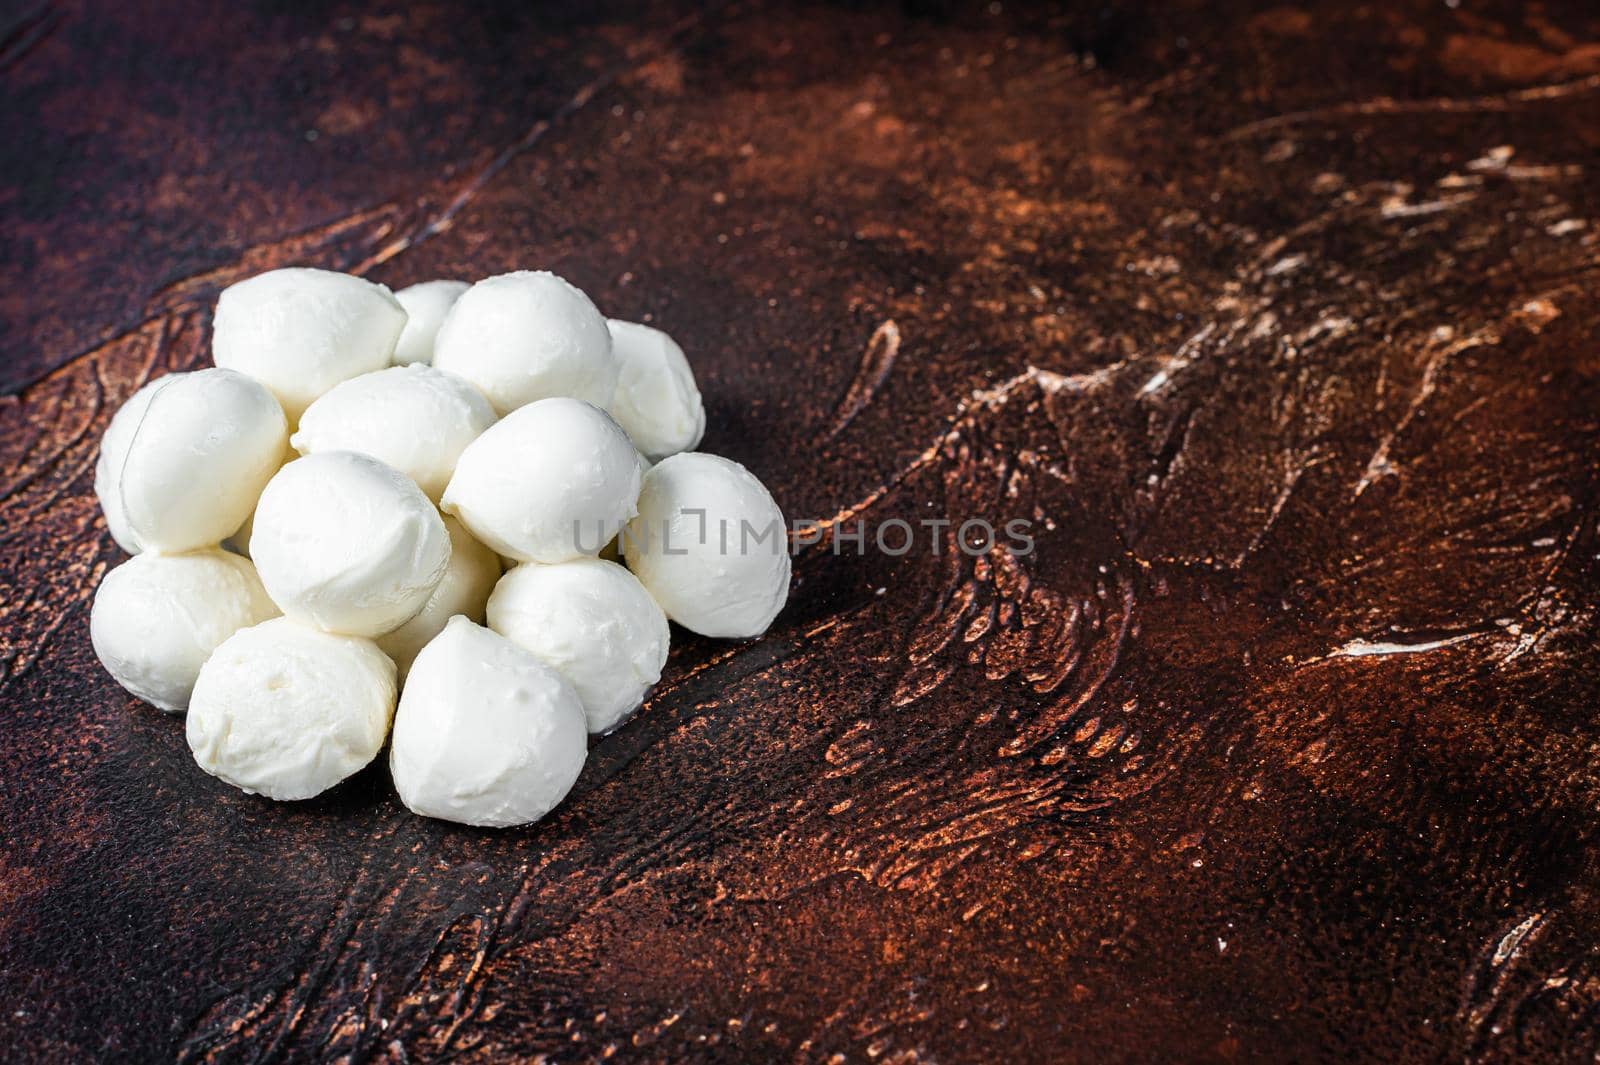 Buffalo mozzarella cheese mini balls on kitchen table. Dark background. Top view. Copy space.